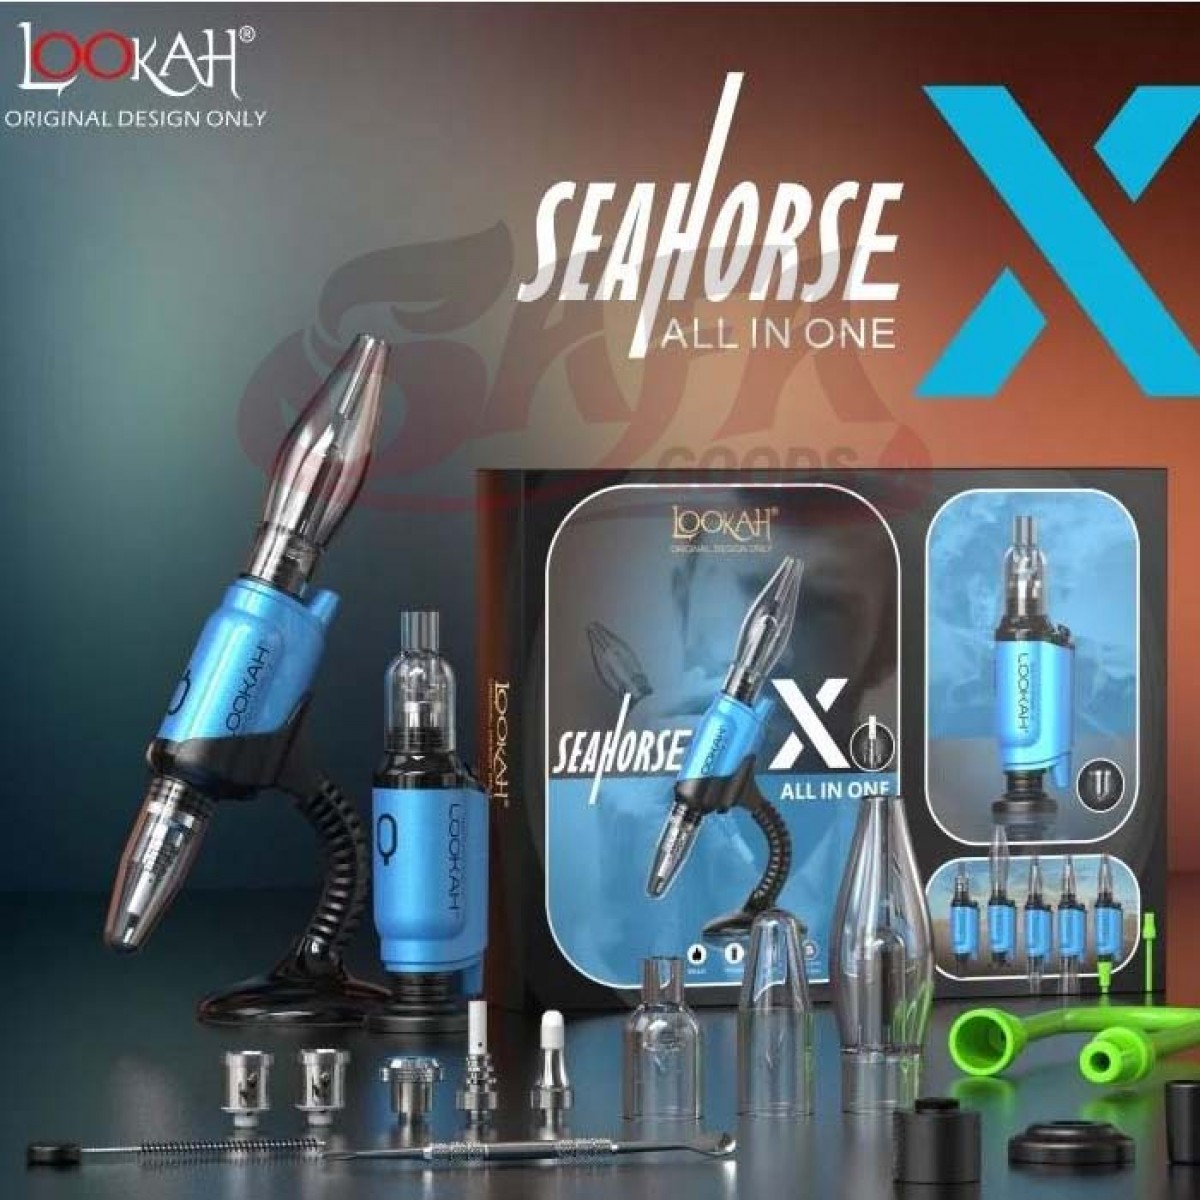 Lookah Seahorse X